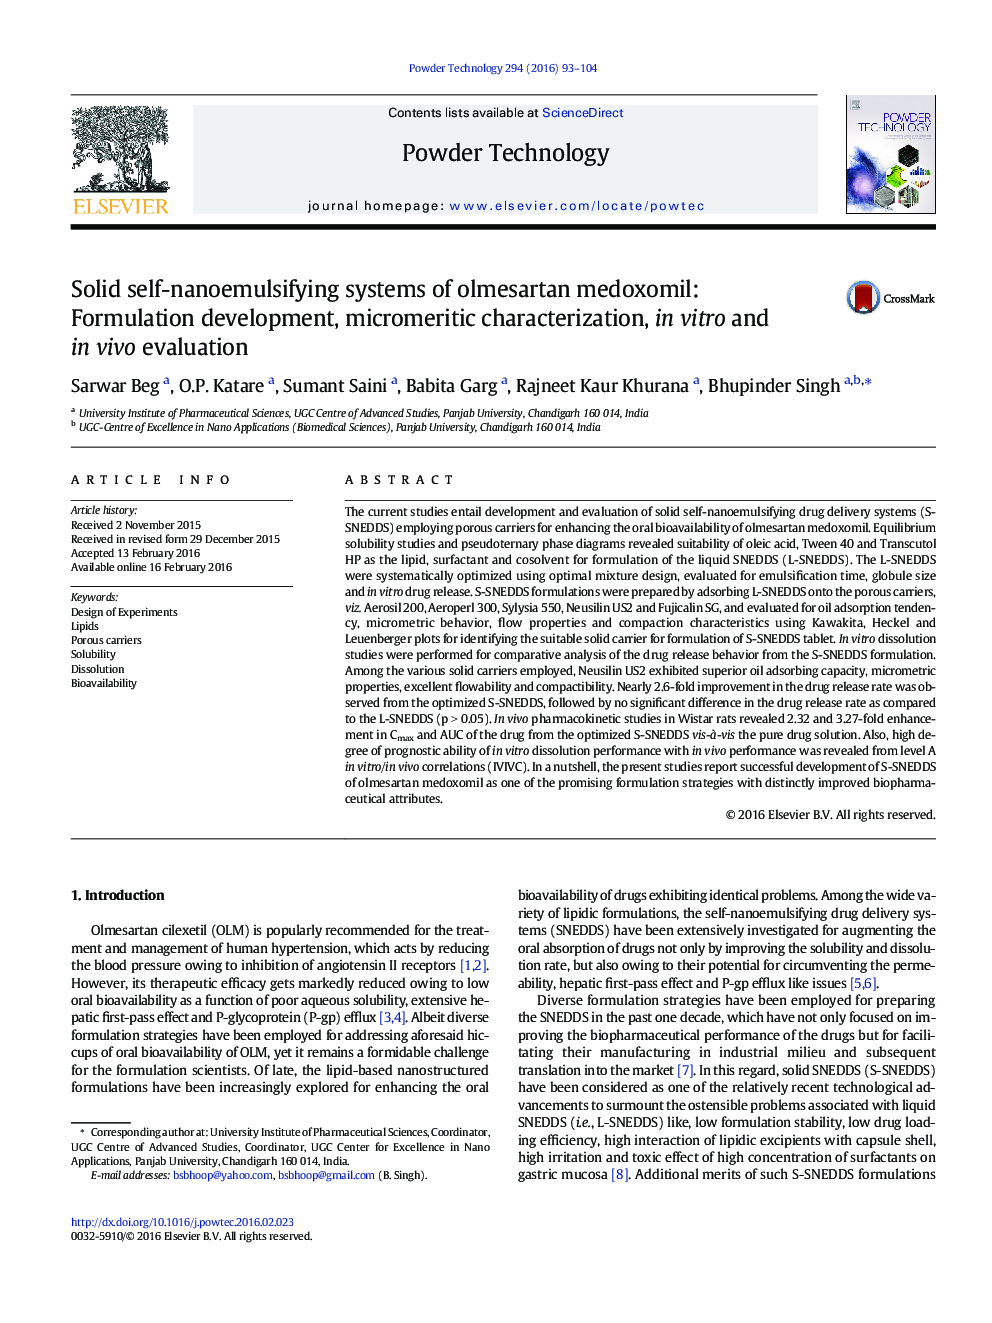 Solid self-nanoemulsifying systems of olmesartan medoxomil: Formulation development, micromeritic characterization, in vitro and in vivo evaluation